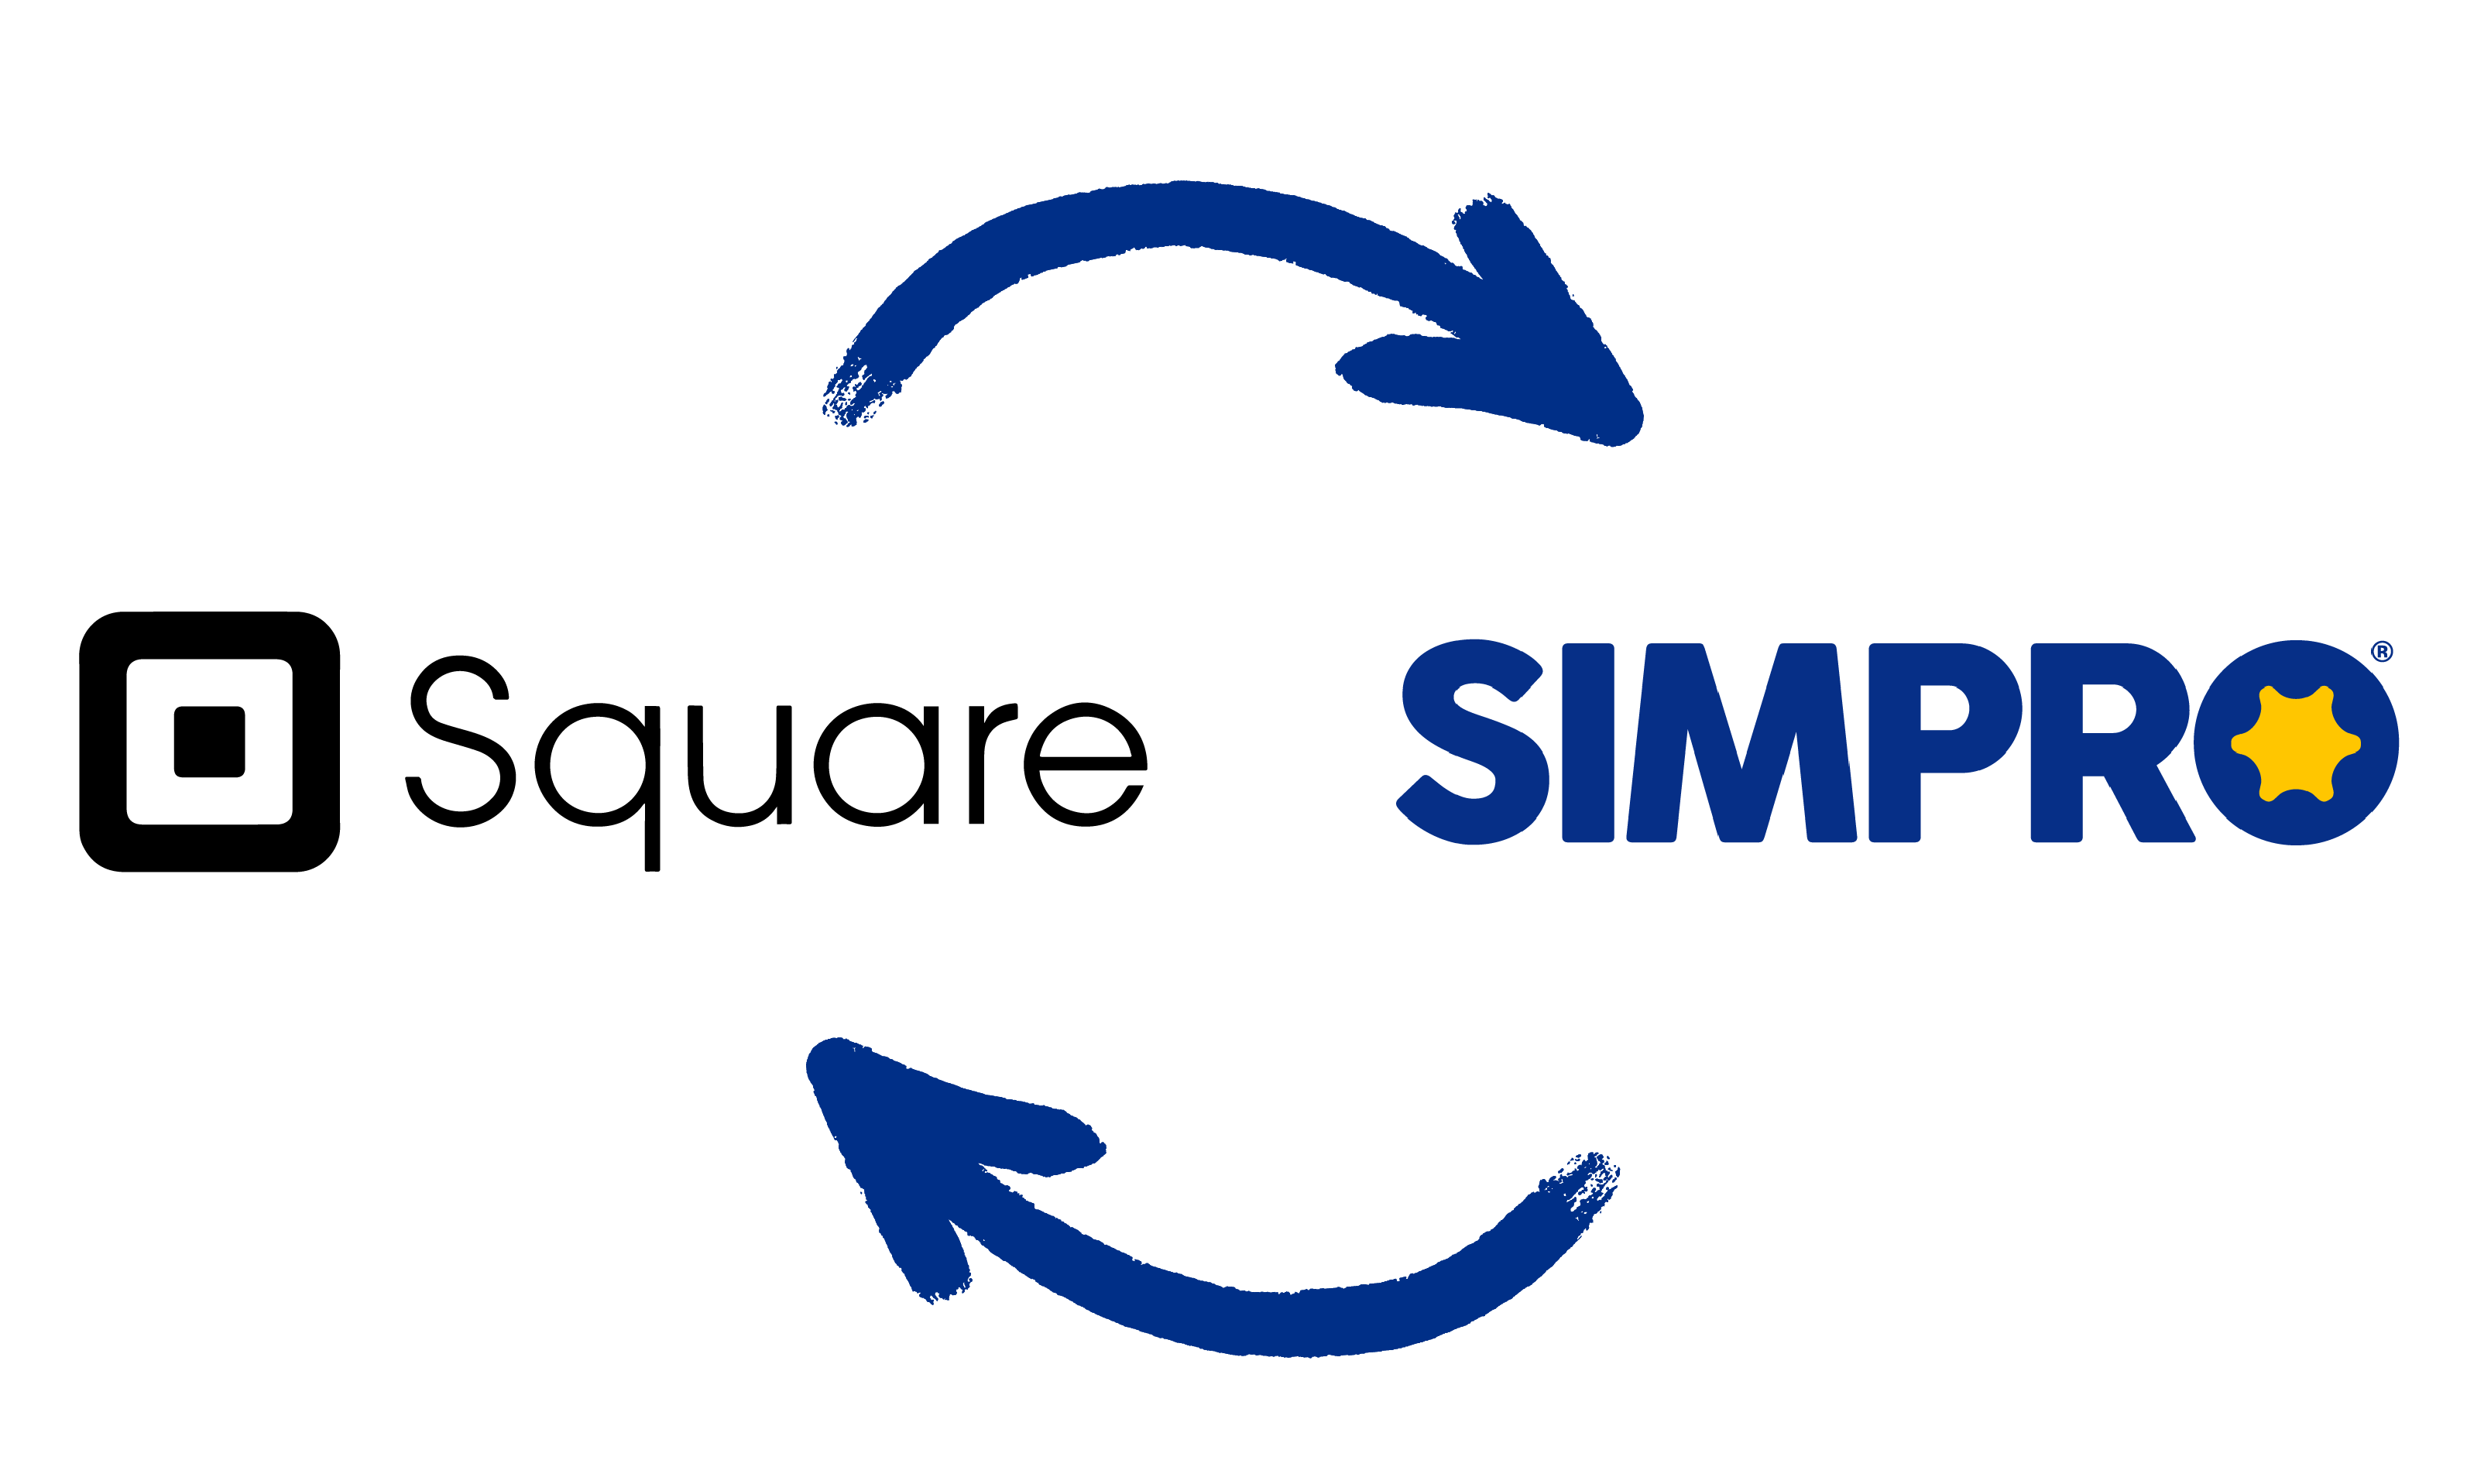 Simpro and Square logo